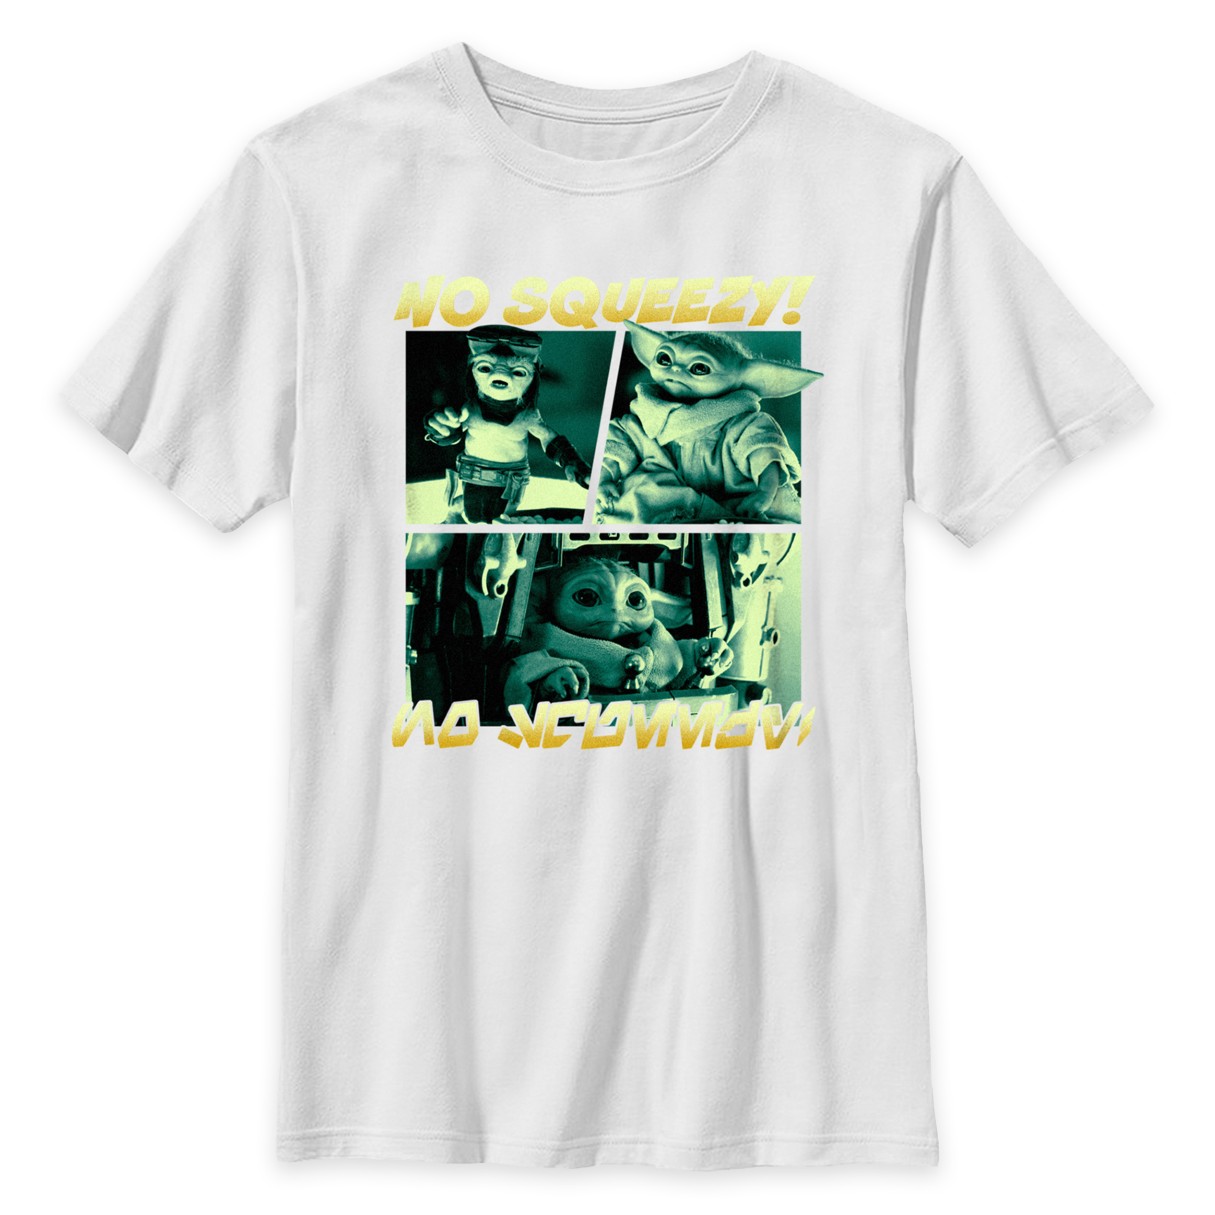 Squeezy!\'\' for – \'\'No Mandalorian shopDisney | Grogu Kids The T-Shirt Wars: Star